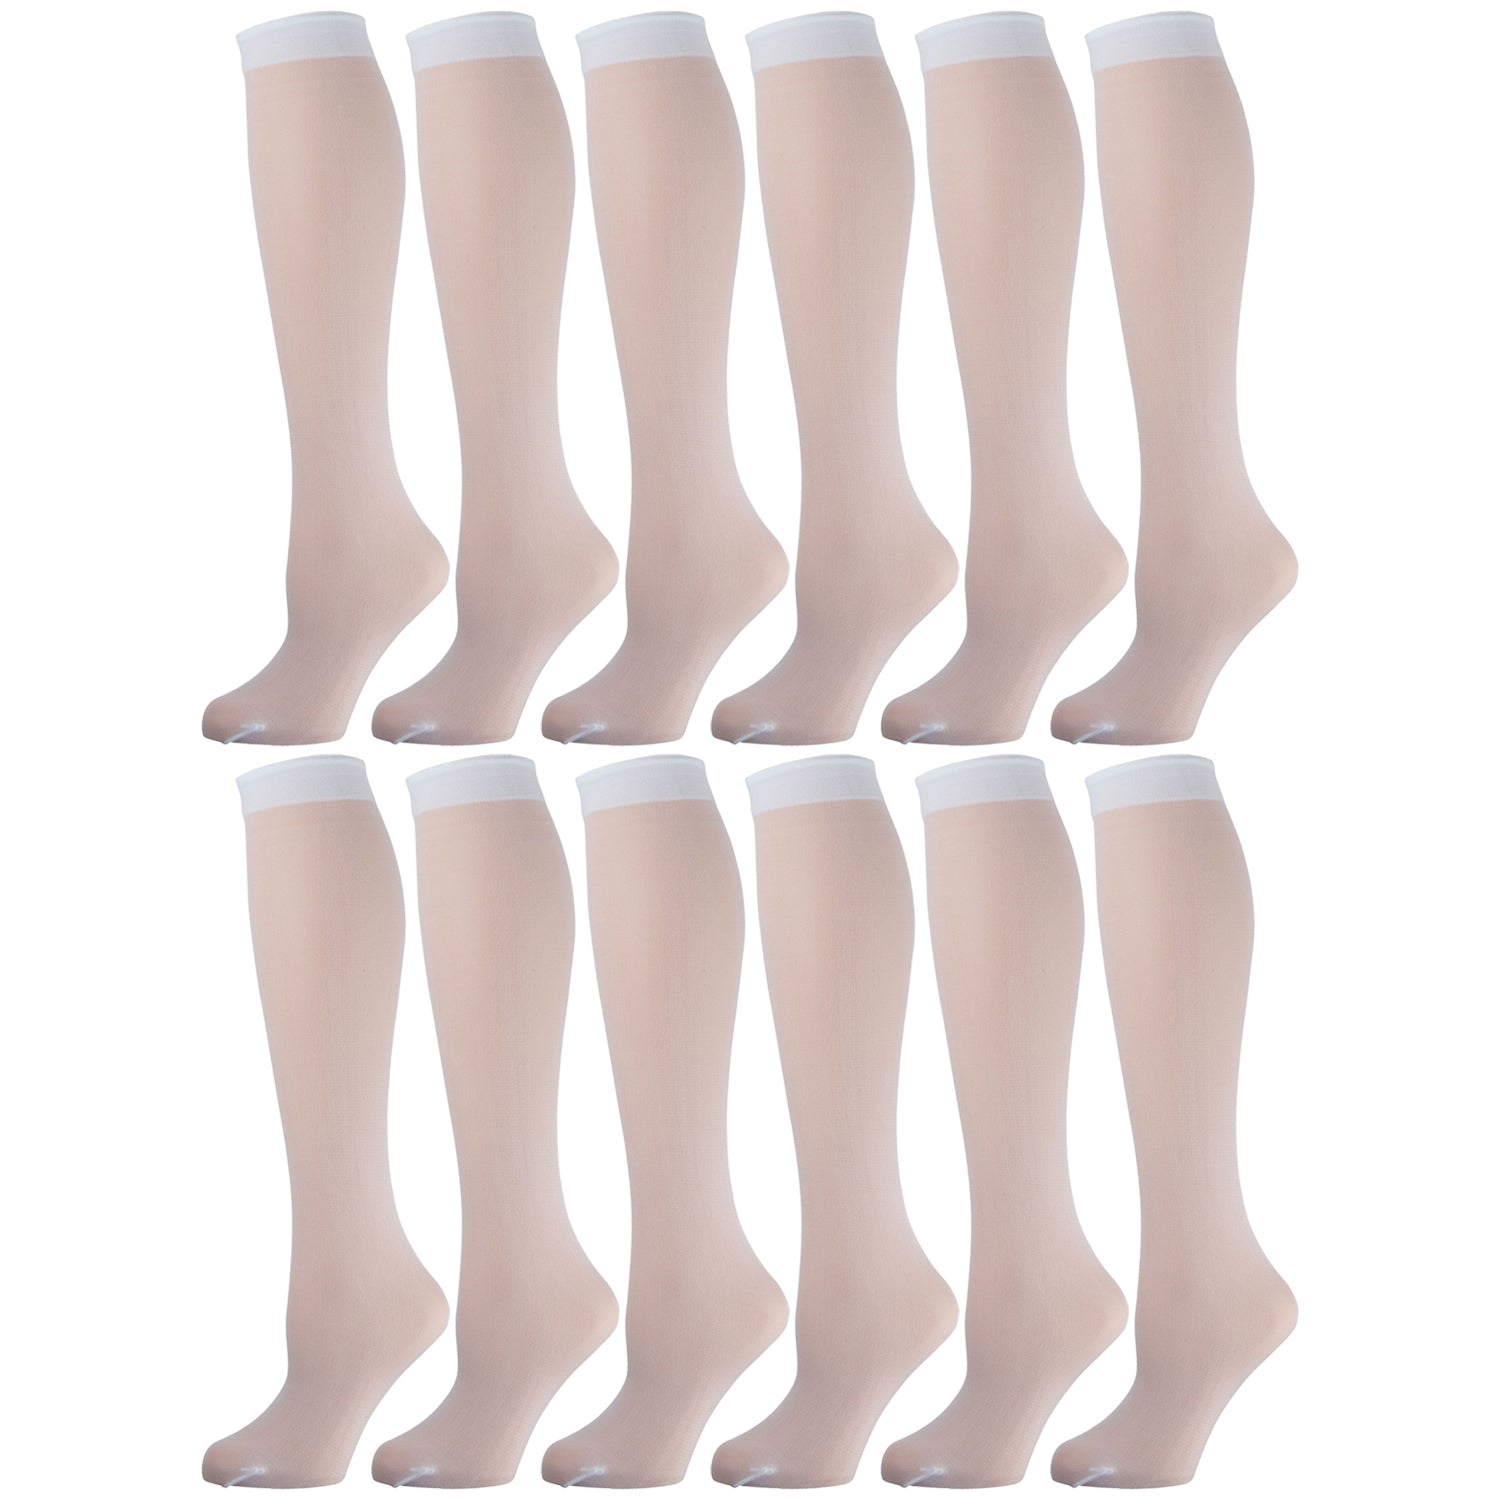 White Opaque Knee High Socks 12 Pairs